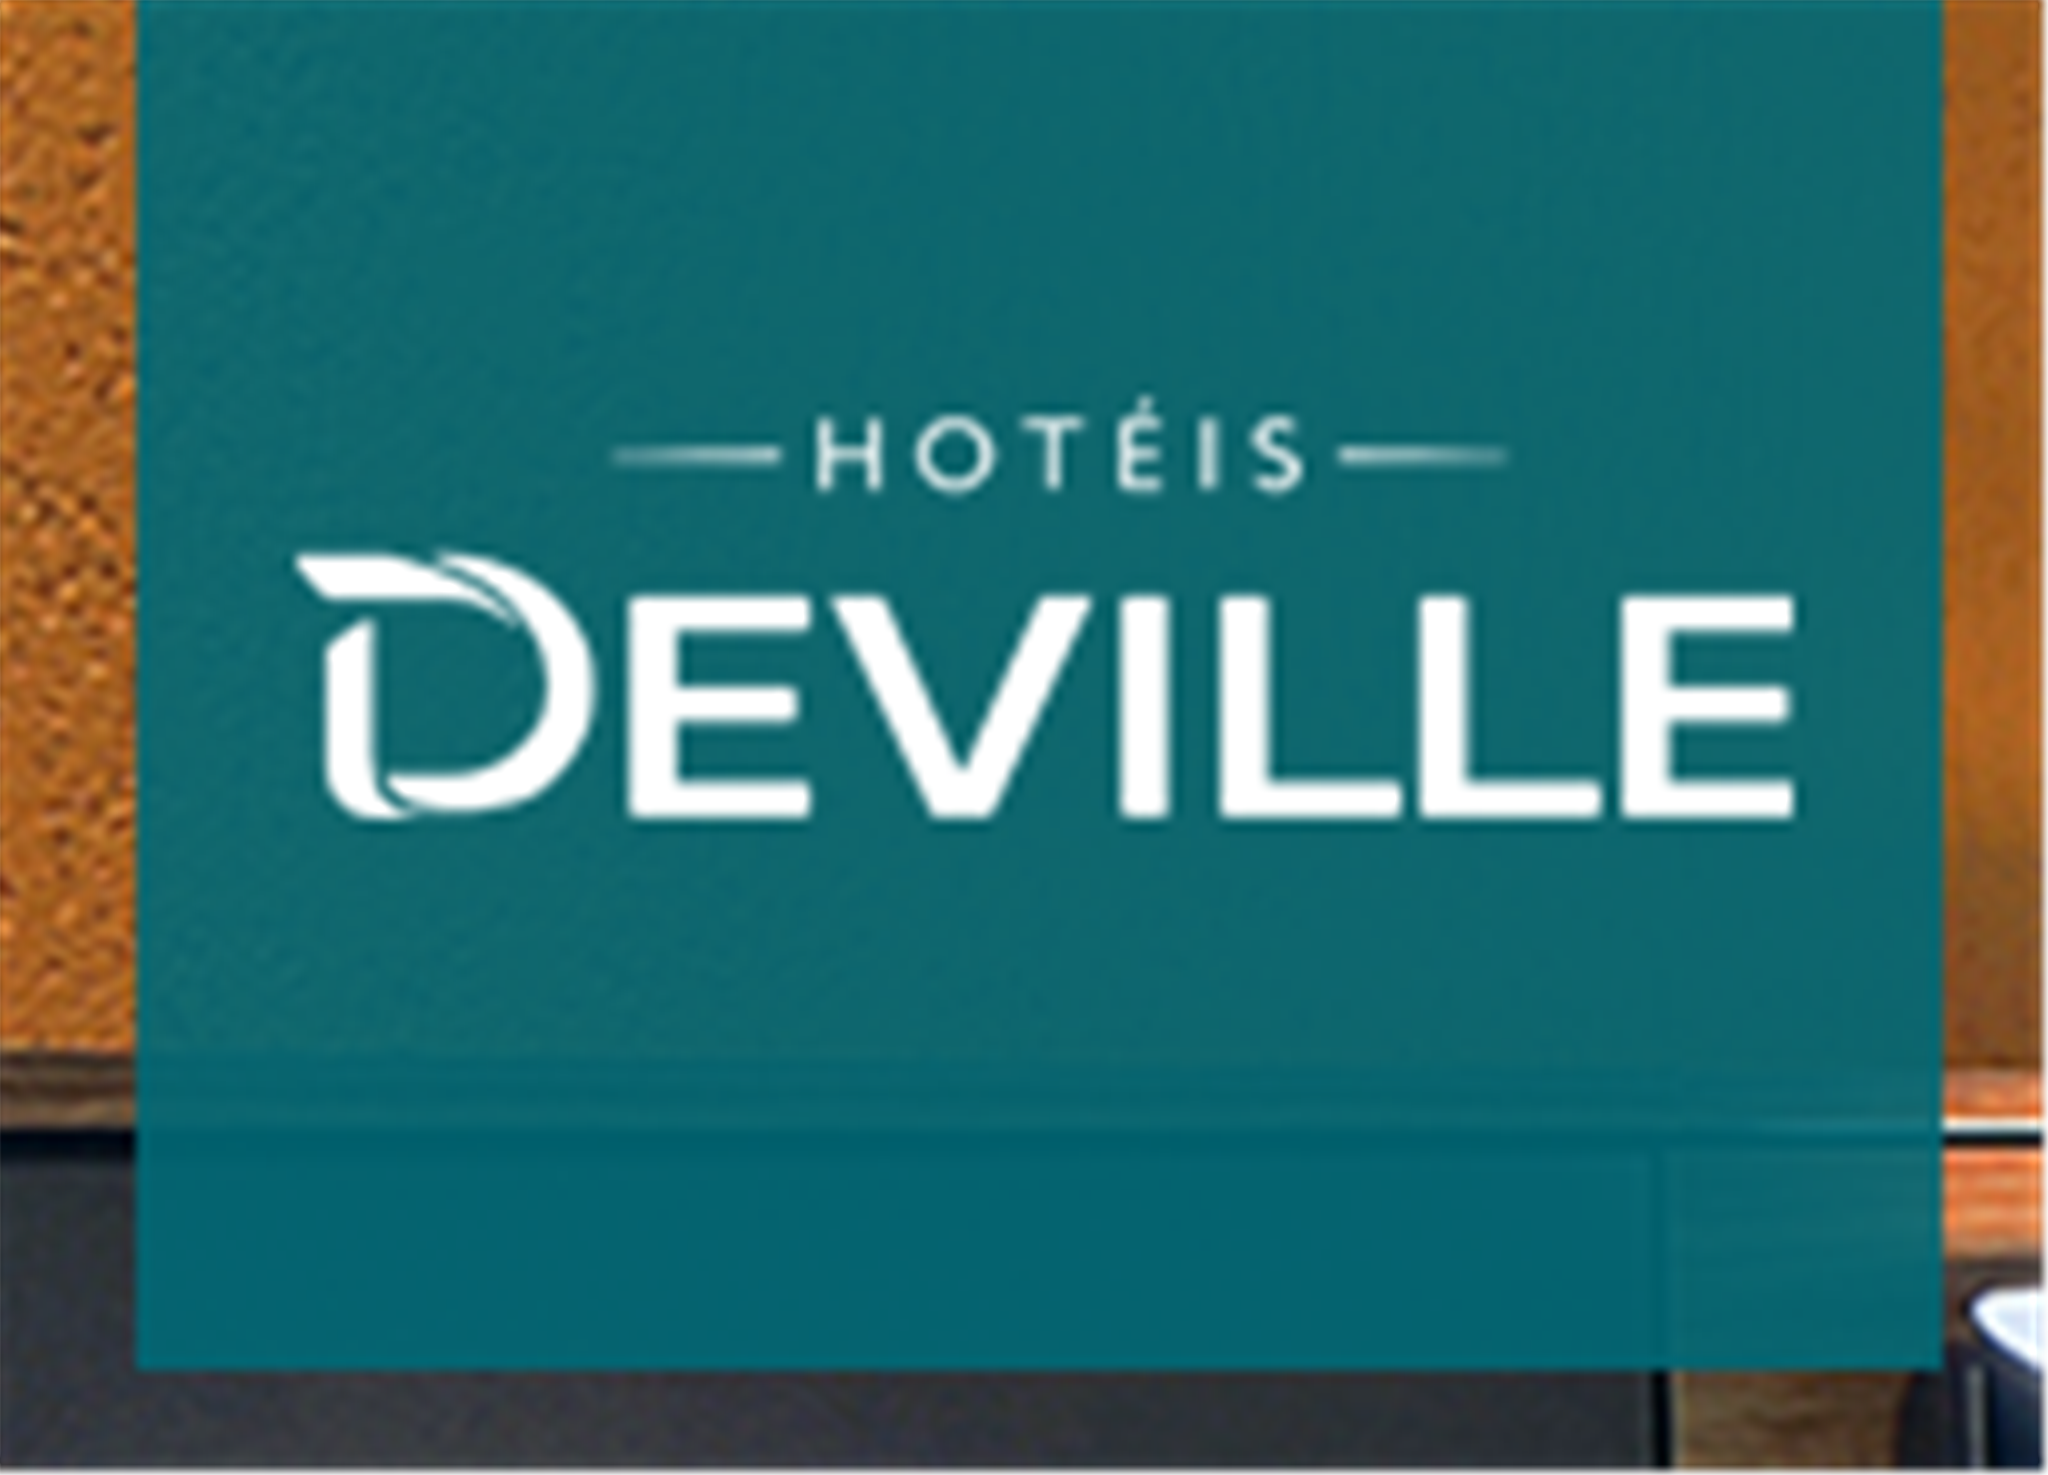 Deville Hoteis e Turismo Ltda